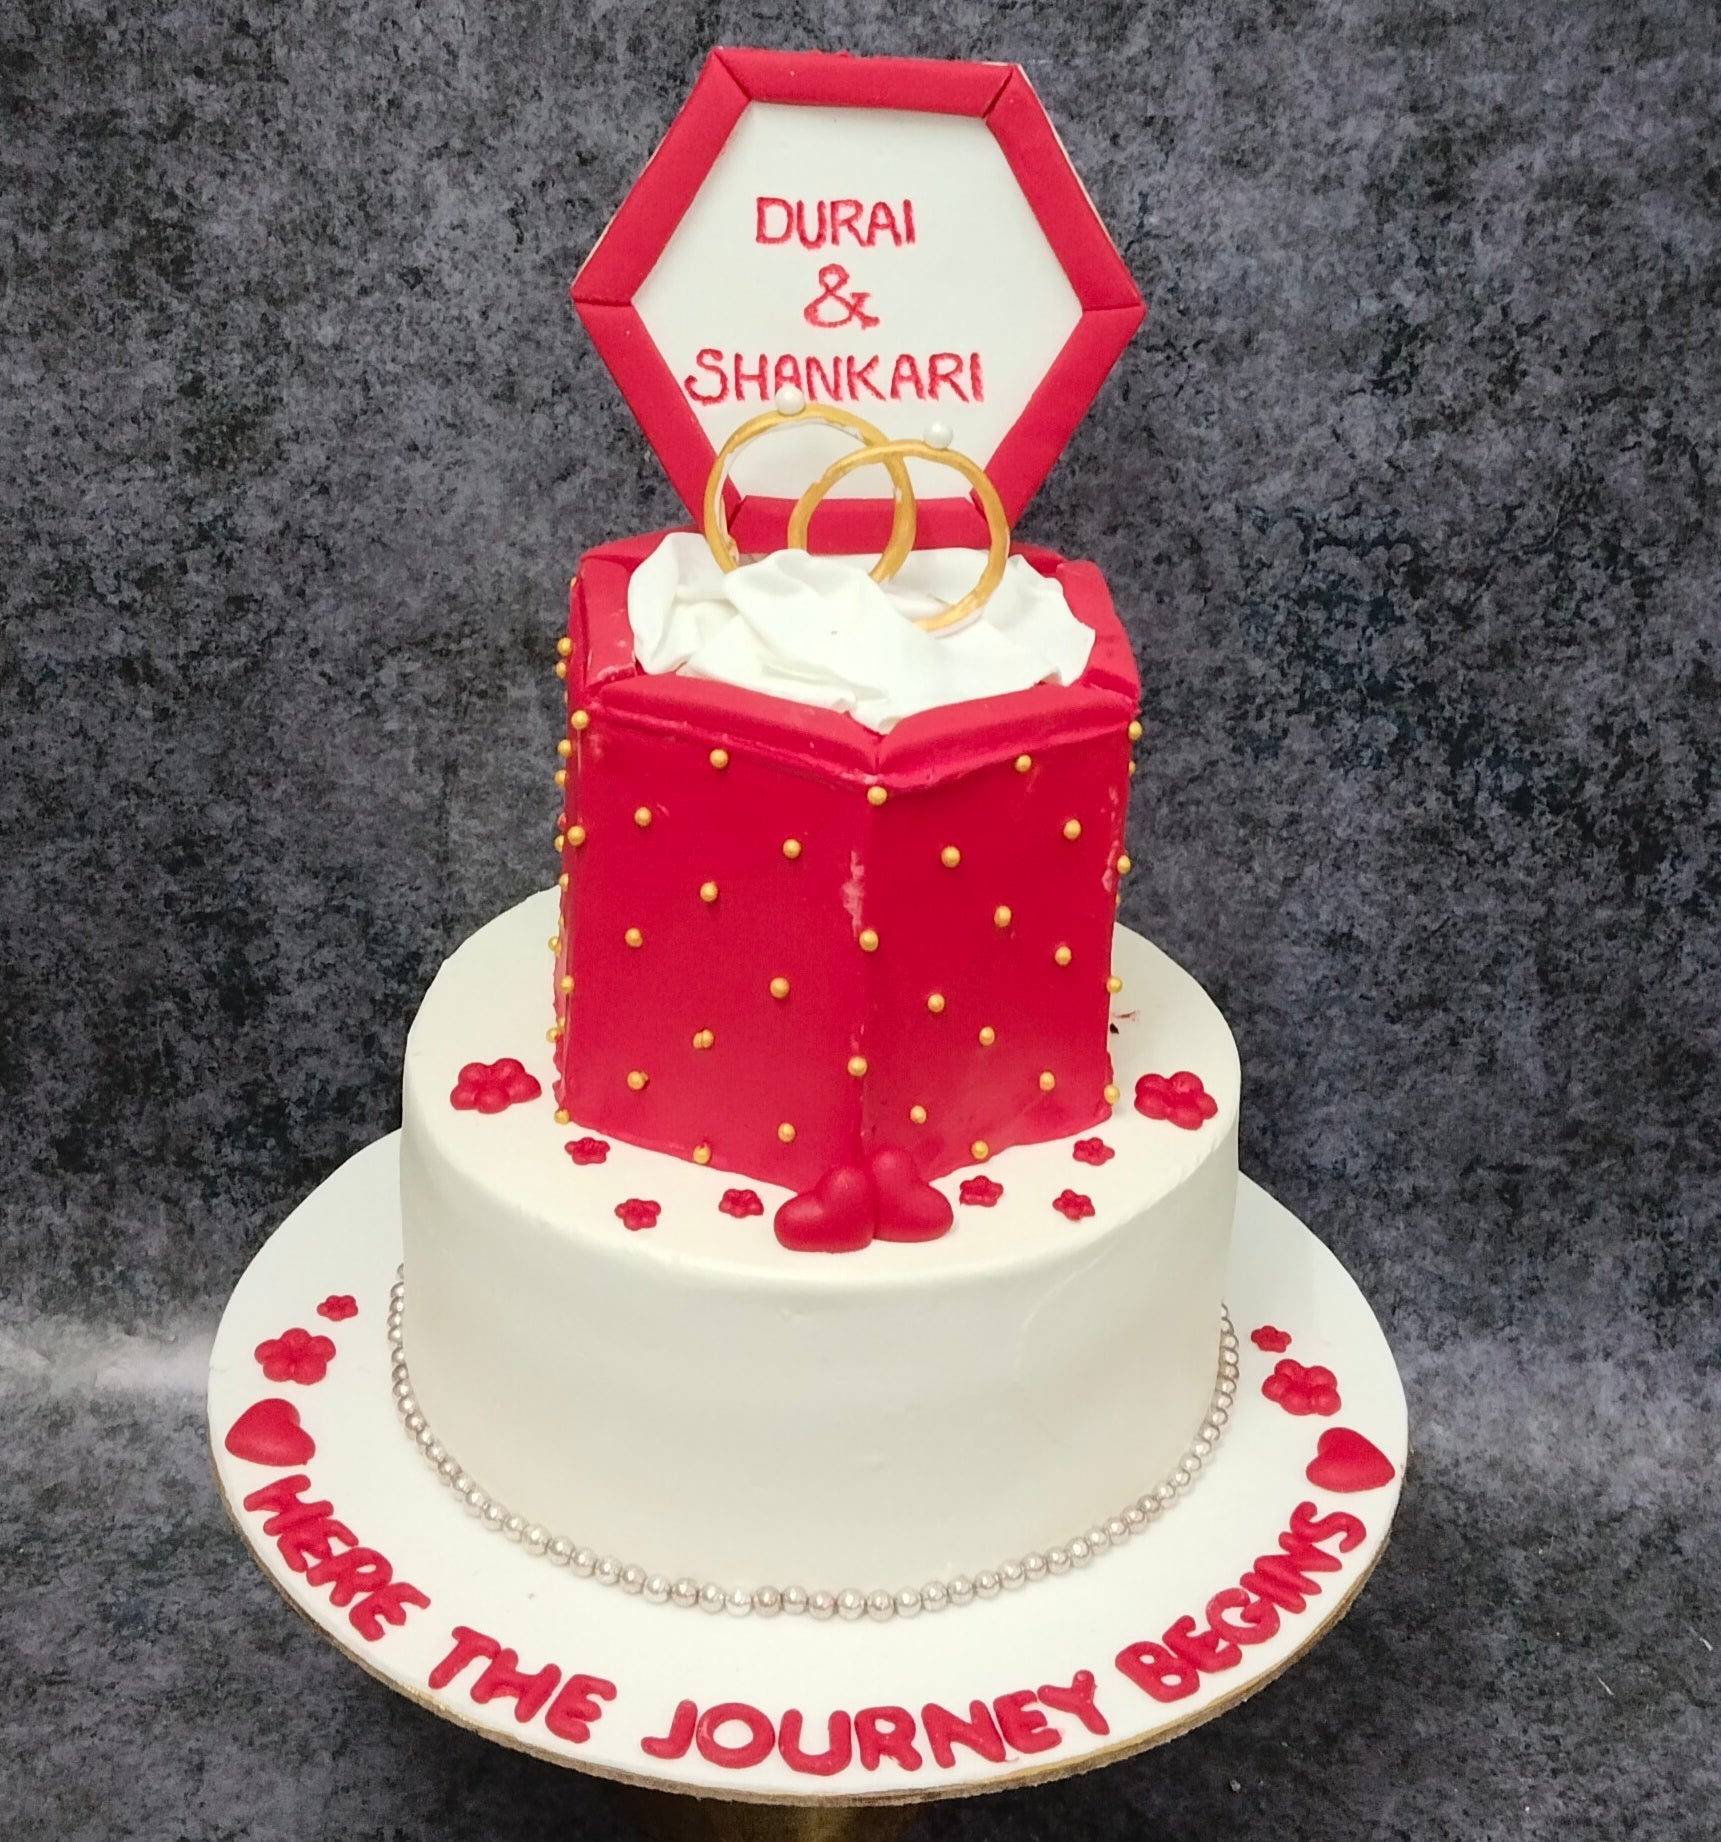 Wedding or Ring Ceremony Theme Cake - Avon Bakers